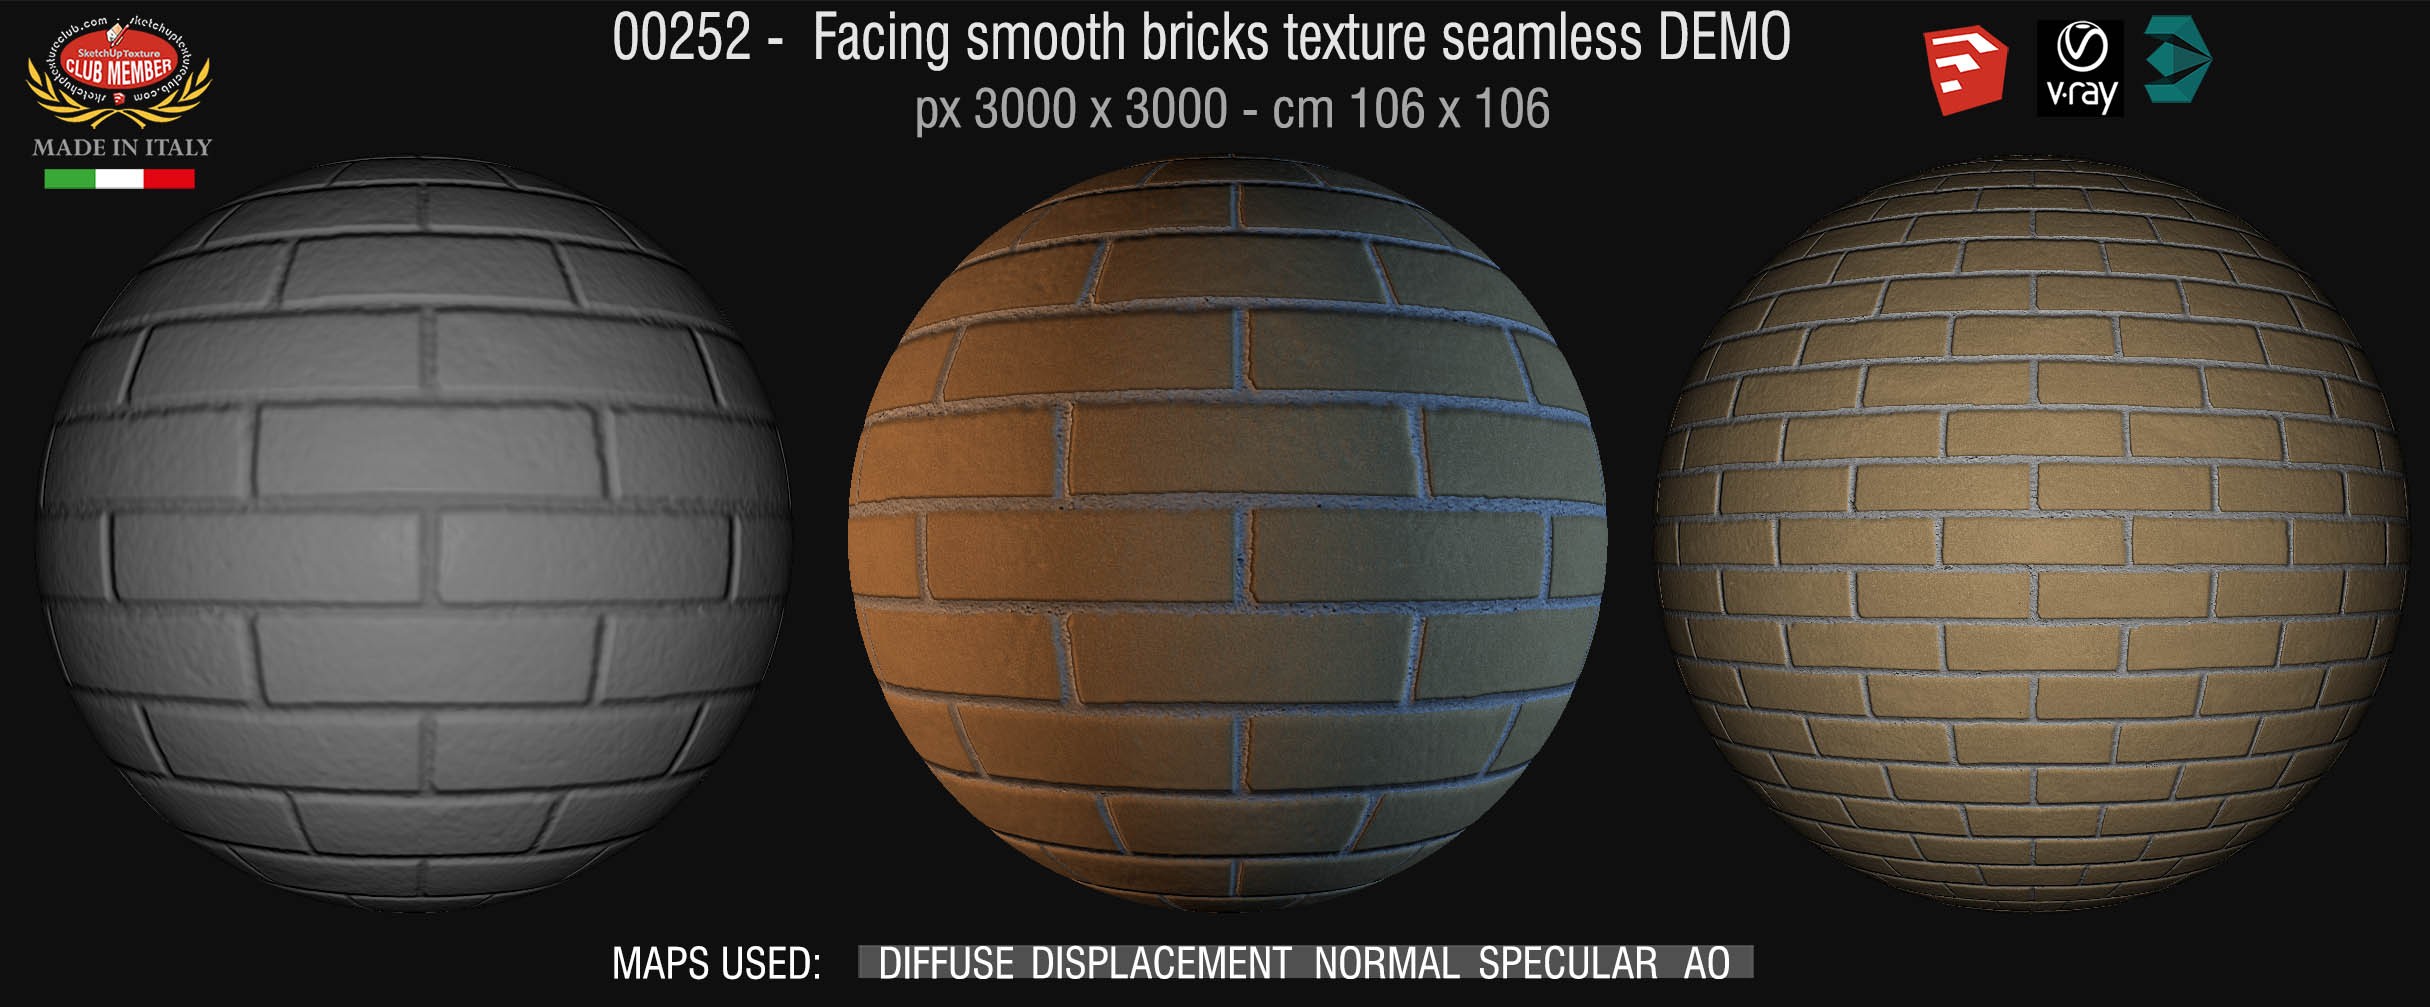 00252 Facing smooth bricks texture seamless + maps DEMO